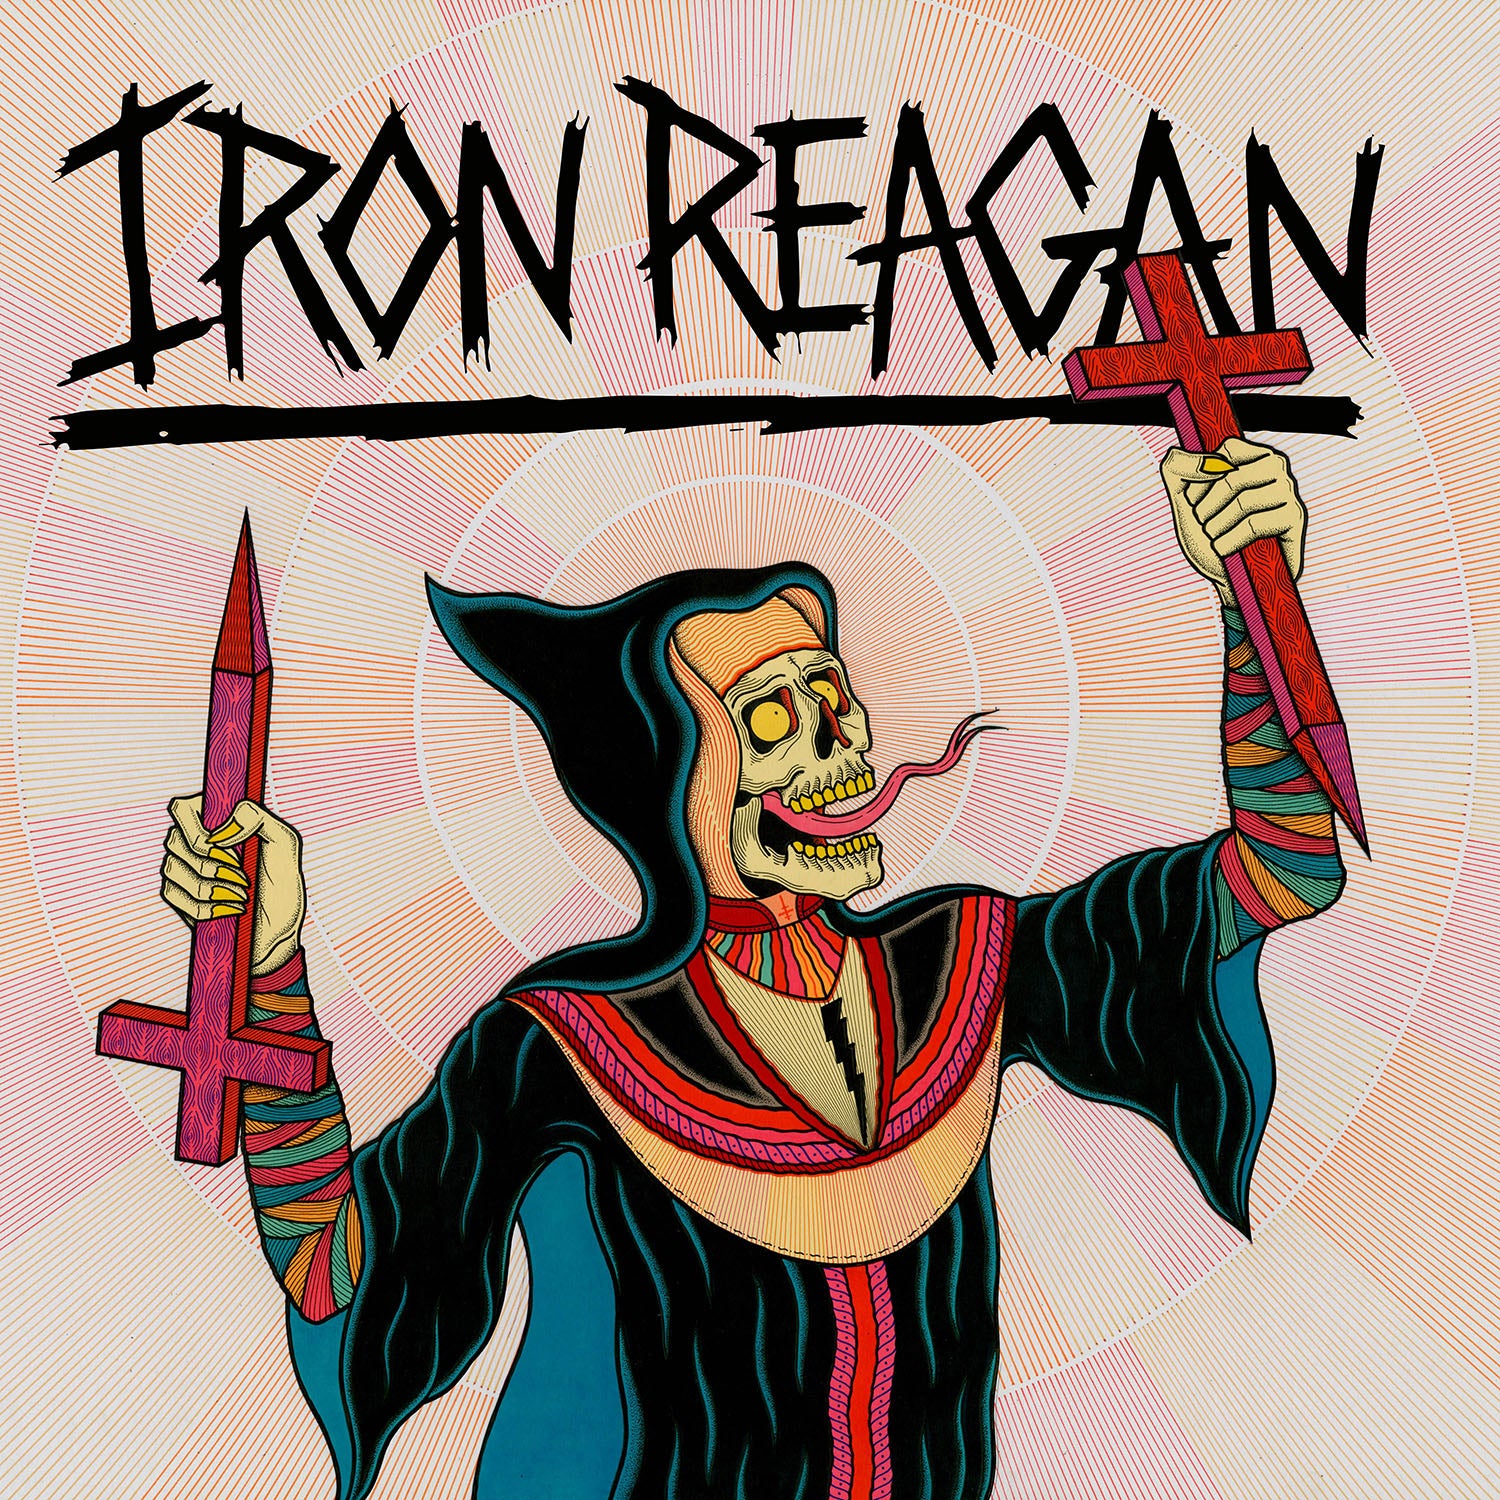 Iron Reagan "Crossover Ministry" LP